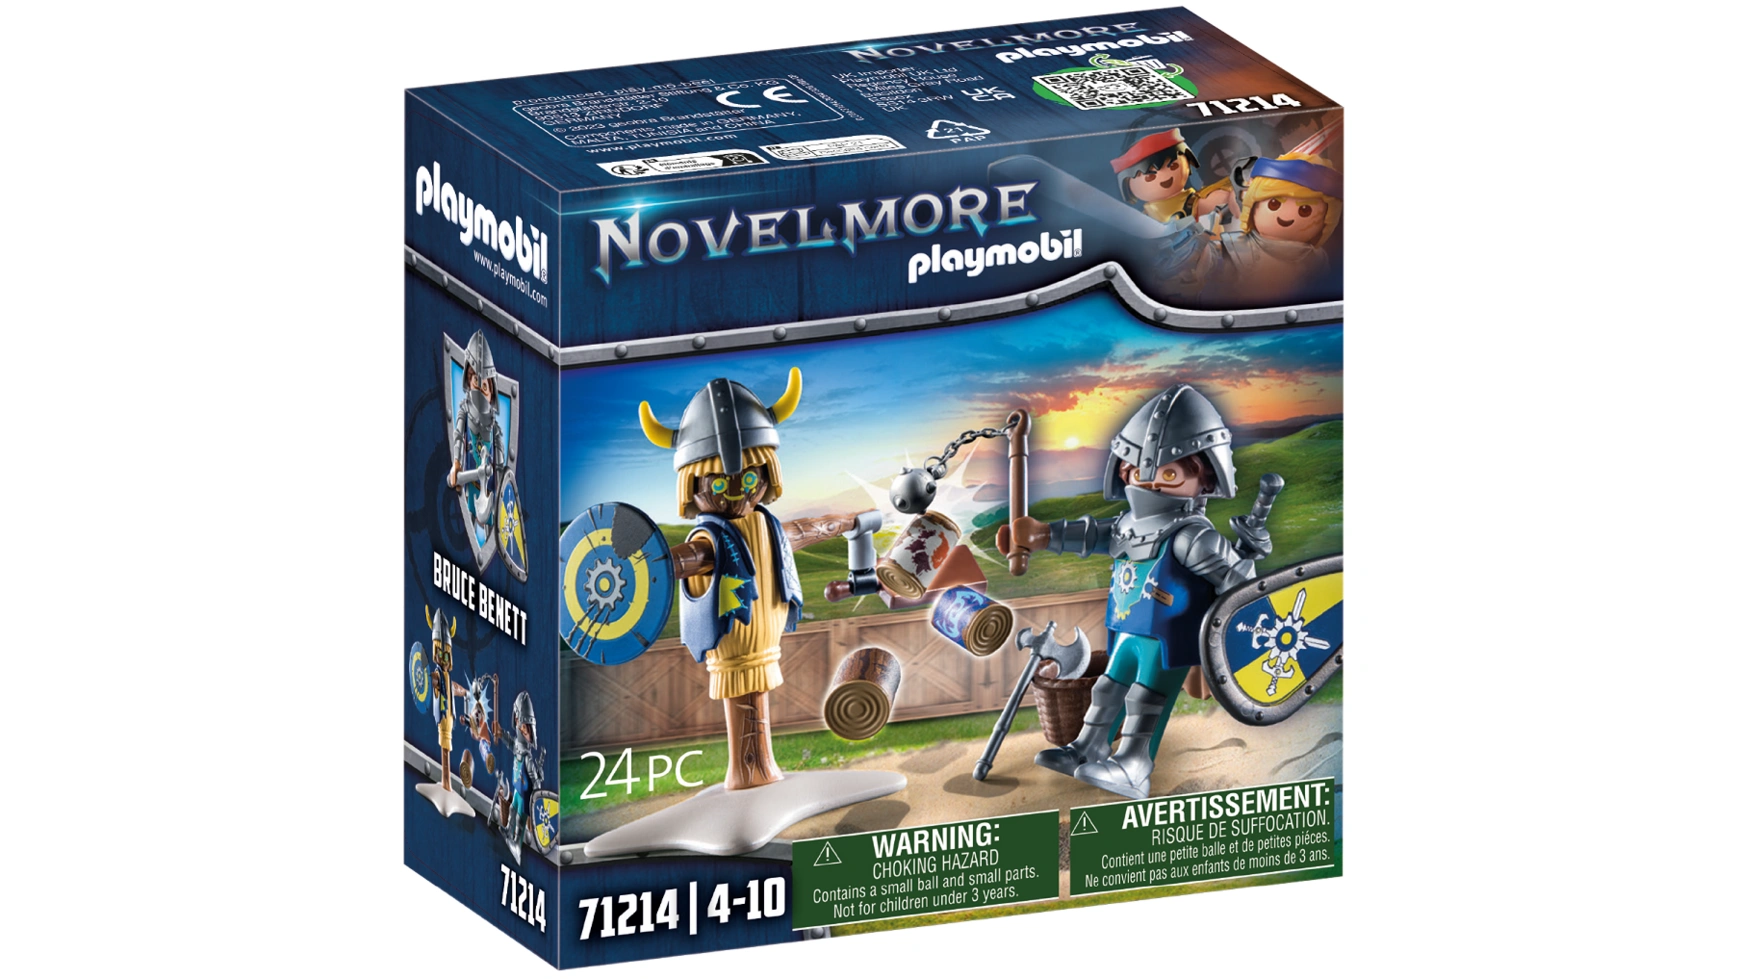 цена Novelmore боевая подготовка Playmobil